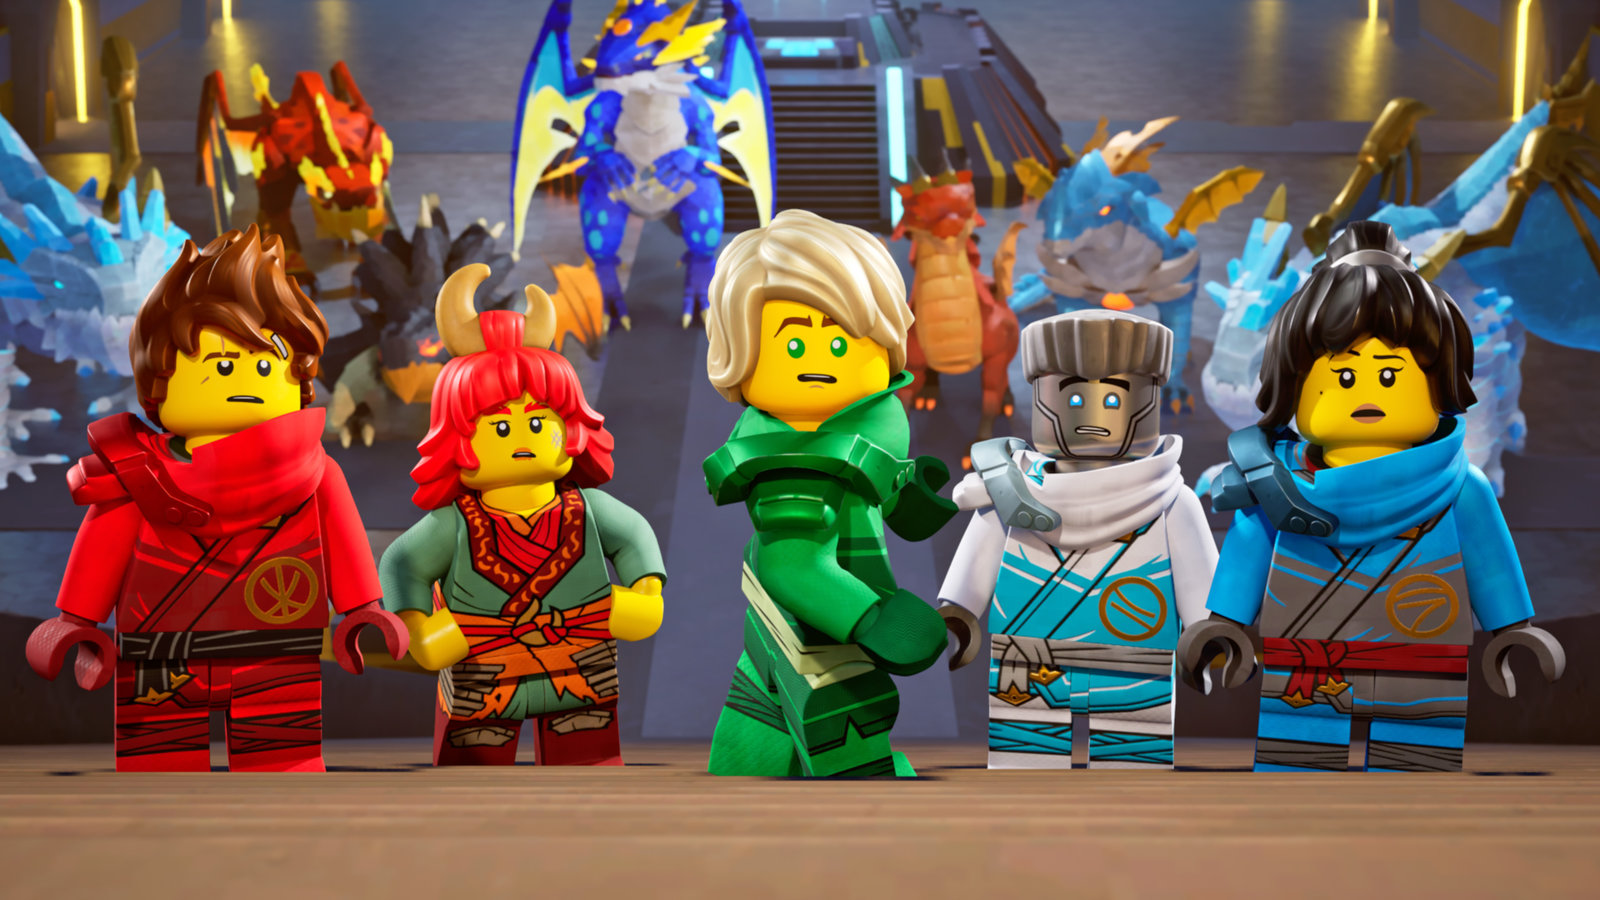 LEGO Ninjago - Staffel 15.3  (DVD)